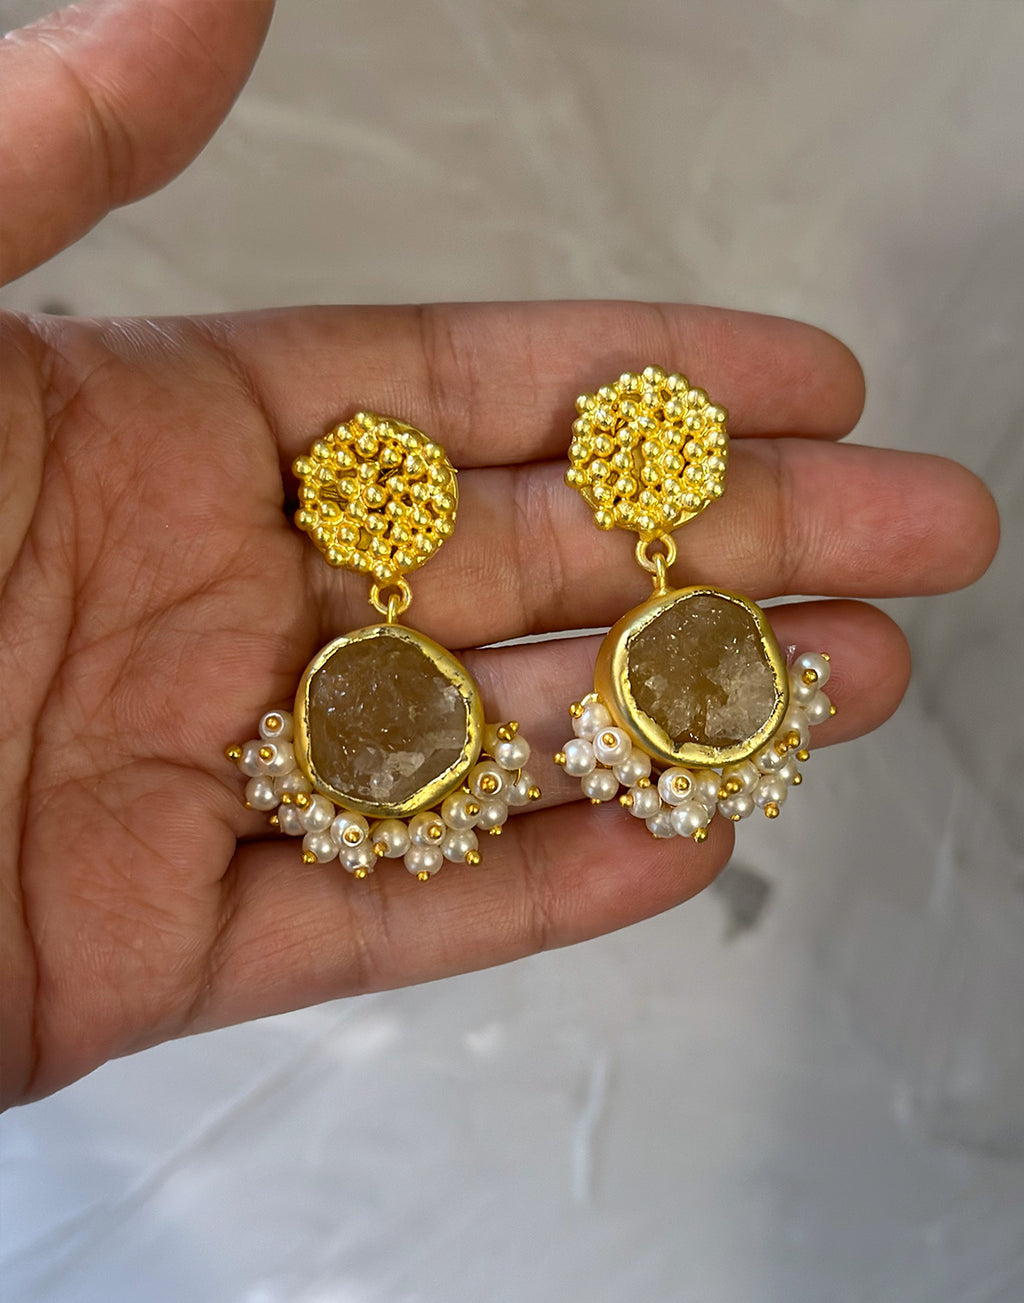 Adora Earrings (Citrine) - Statement Earrings - Gold-Plated & Hypoallergenic Jewellery - Made in India - Dubai Jewellery - Dori